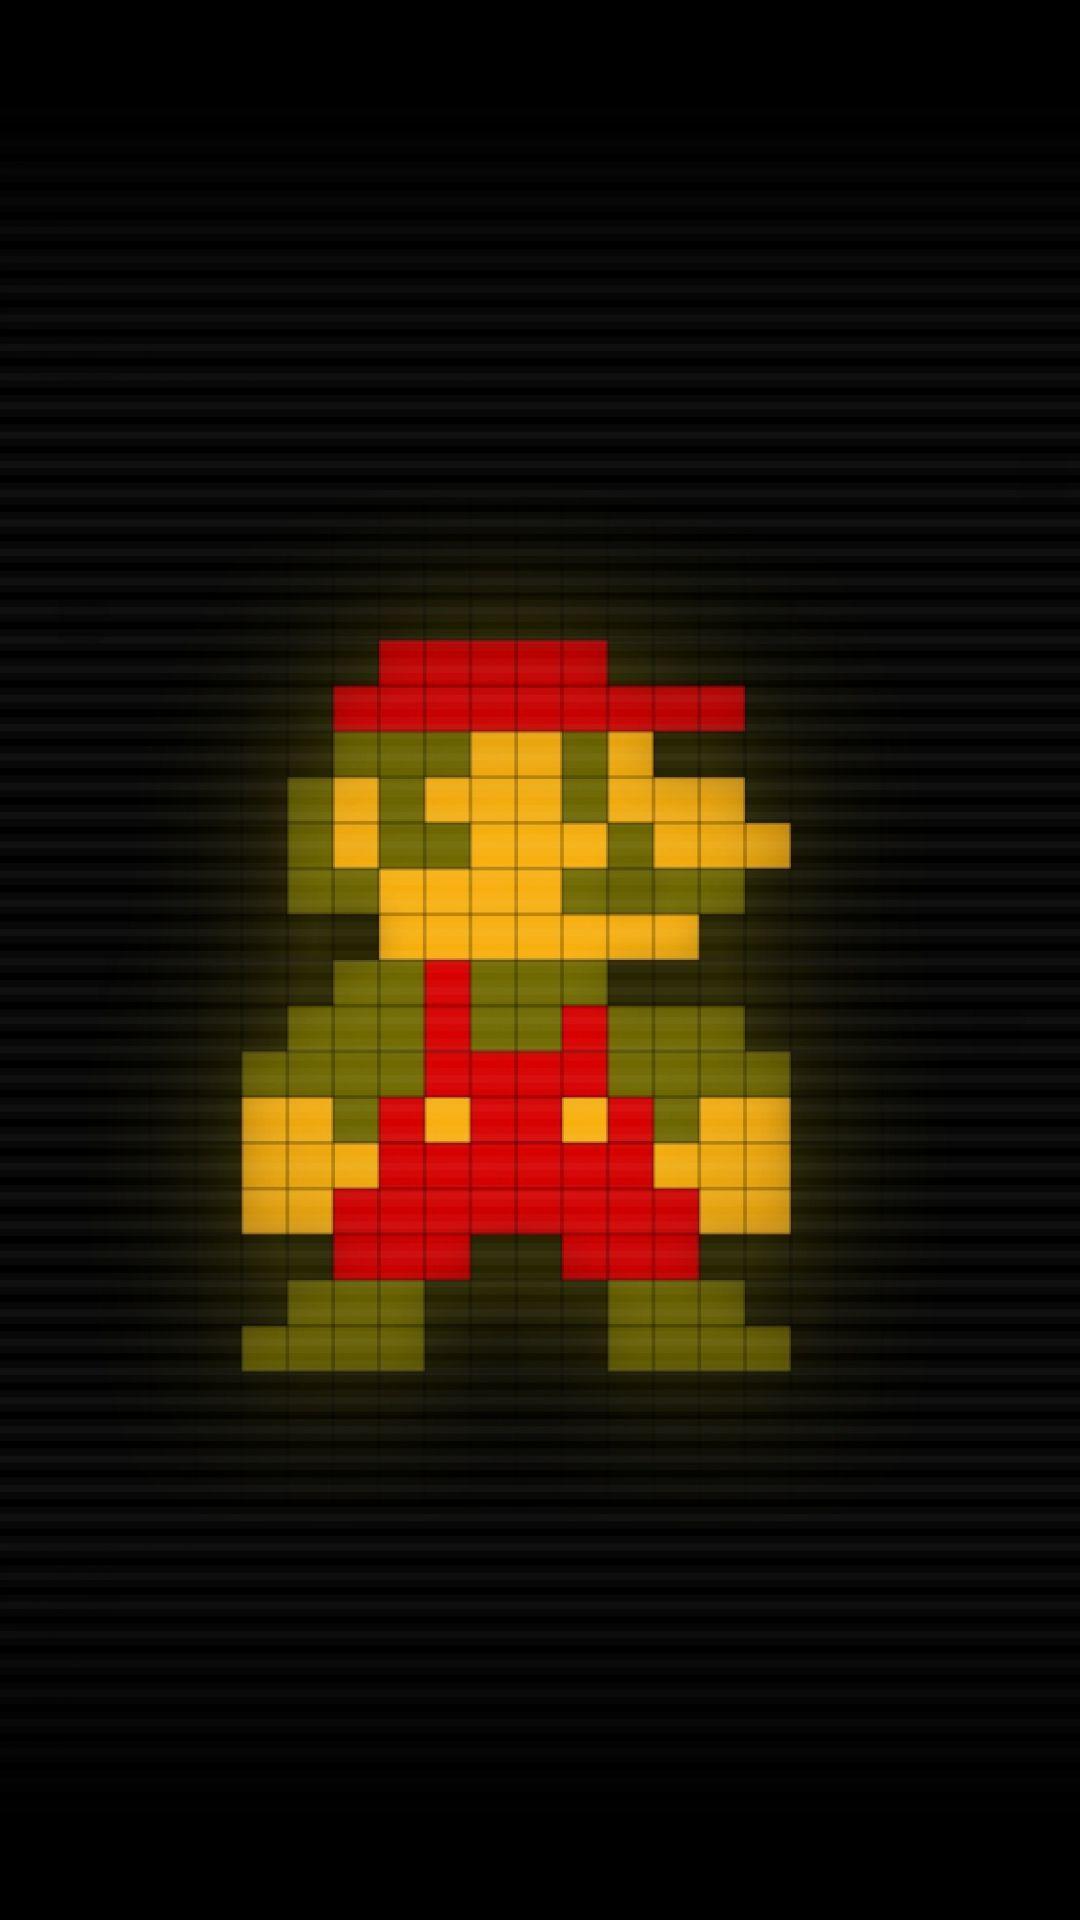 Hd Pixel Art Mario Bros Wallpaper For Mobile (JPEG Image, 1080 × 1920 Pixels) (31%). Character Wallpaper, Mario Bros, Mario